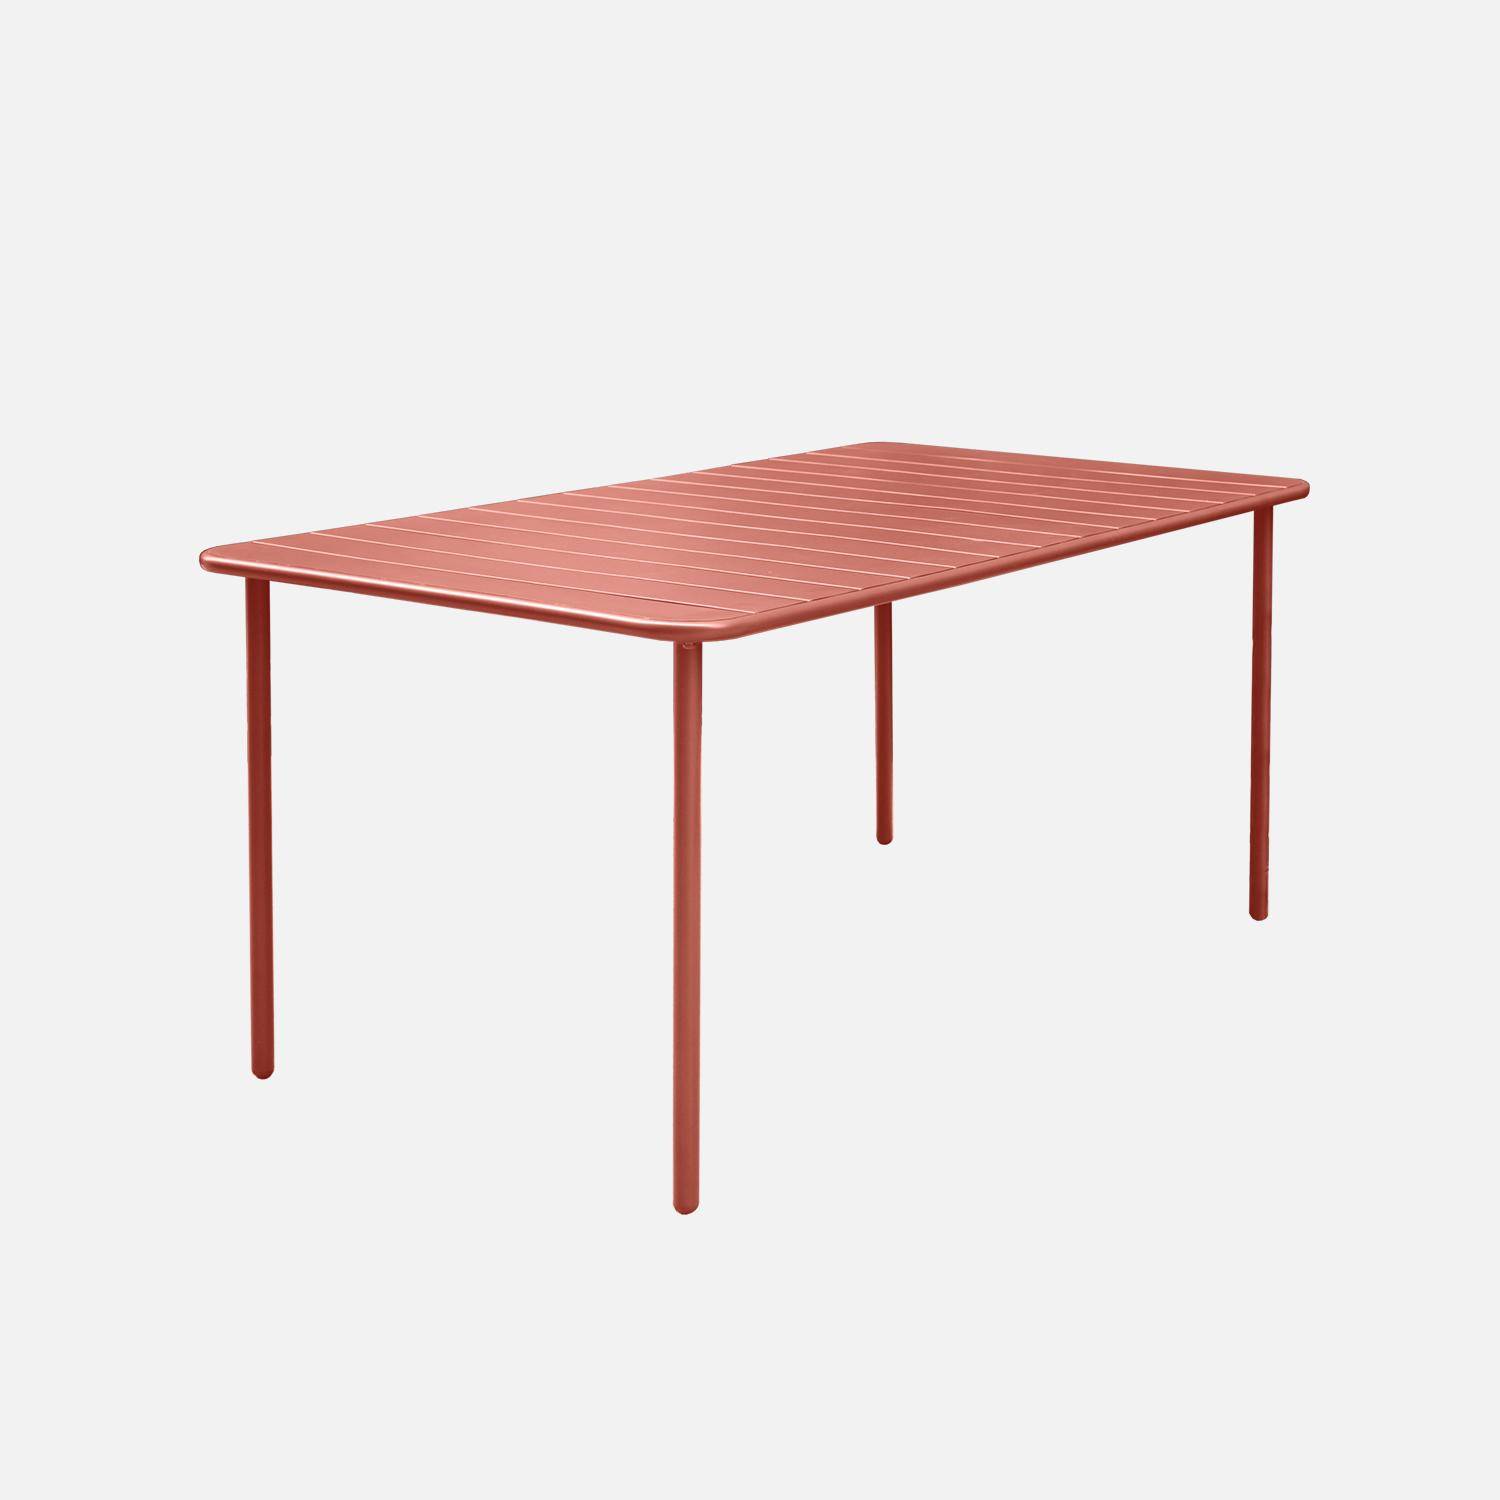 6-8 Seater metal garden table, 160x90xH72.5cm, Terracotta,sweeek,Photo3